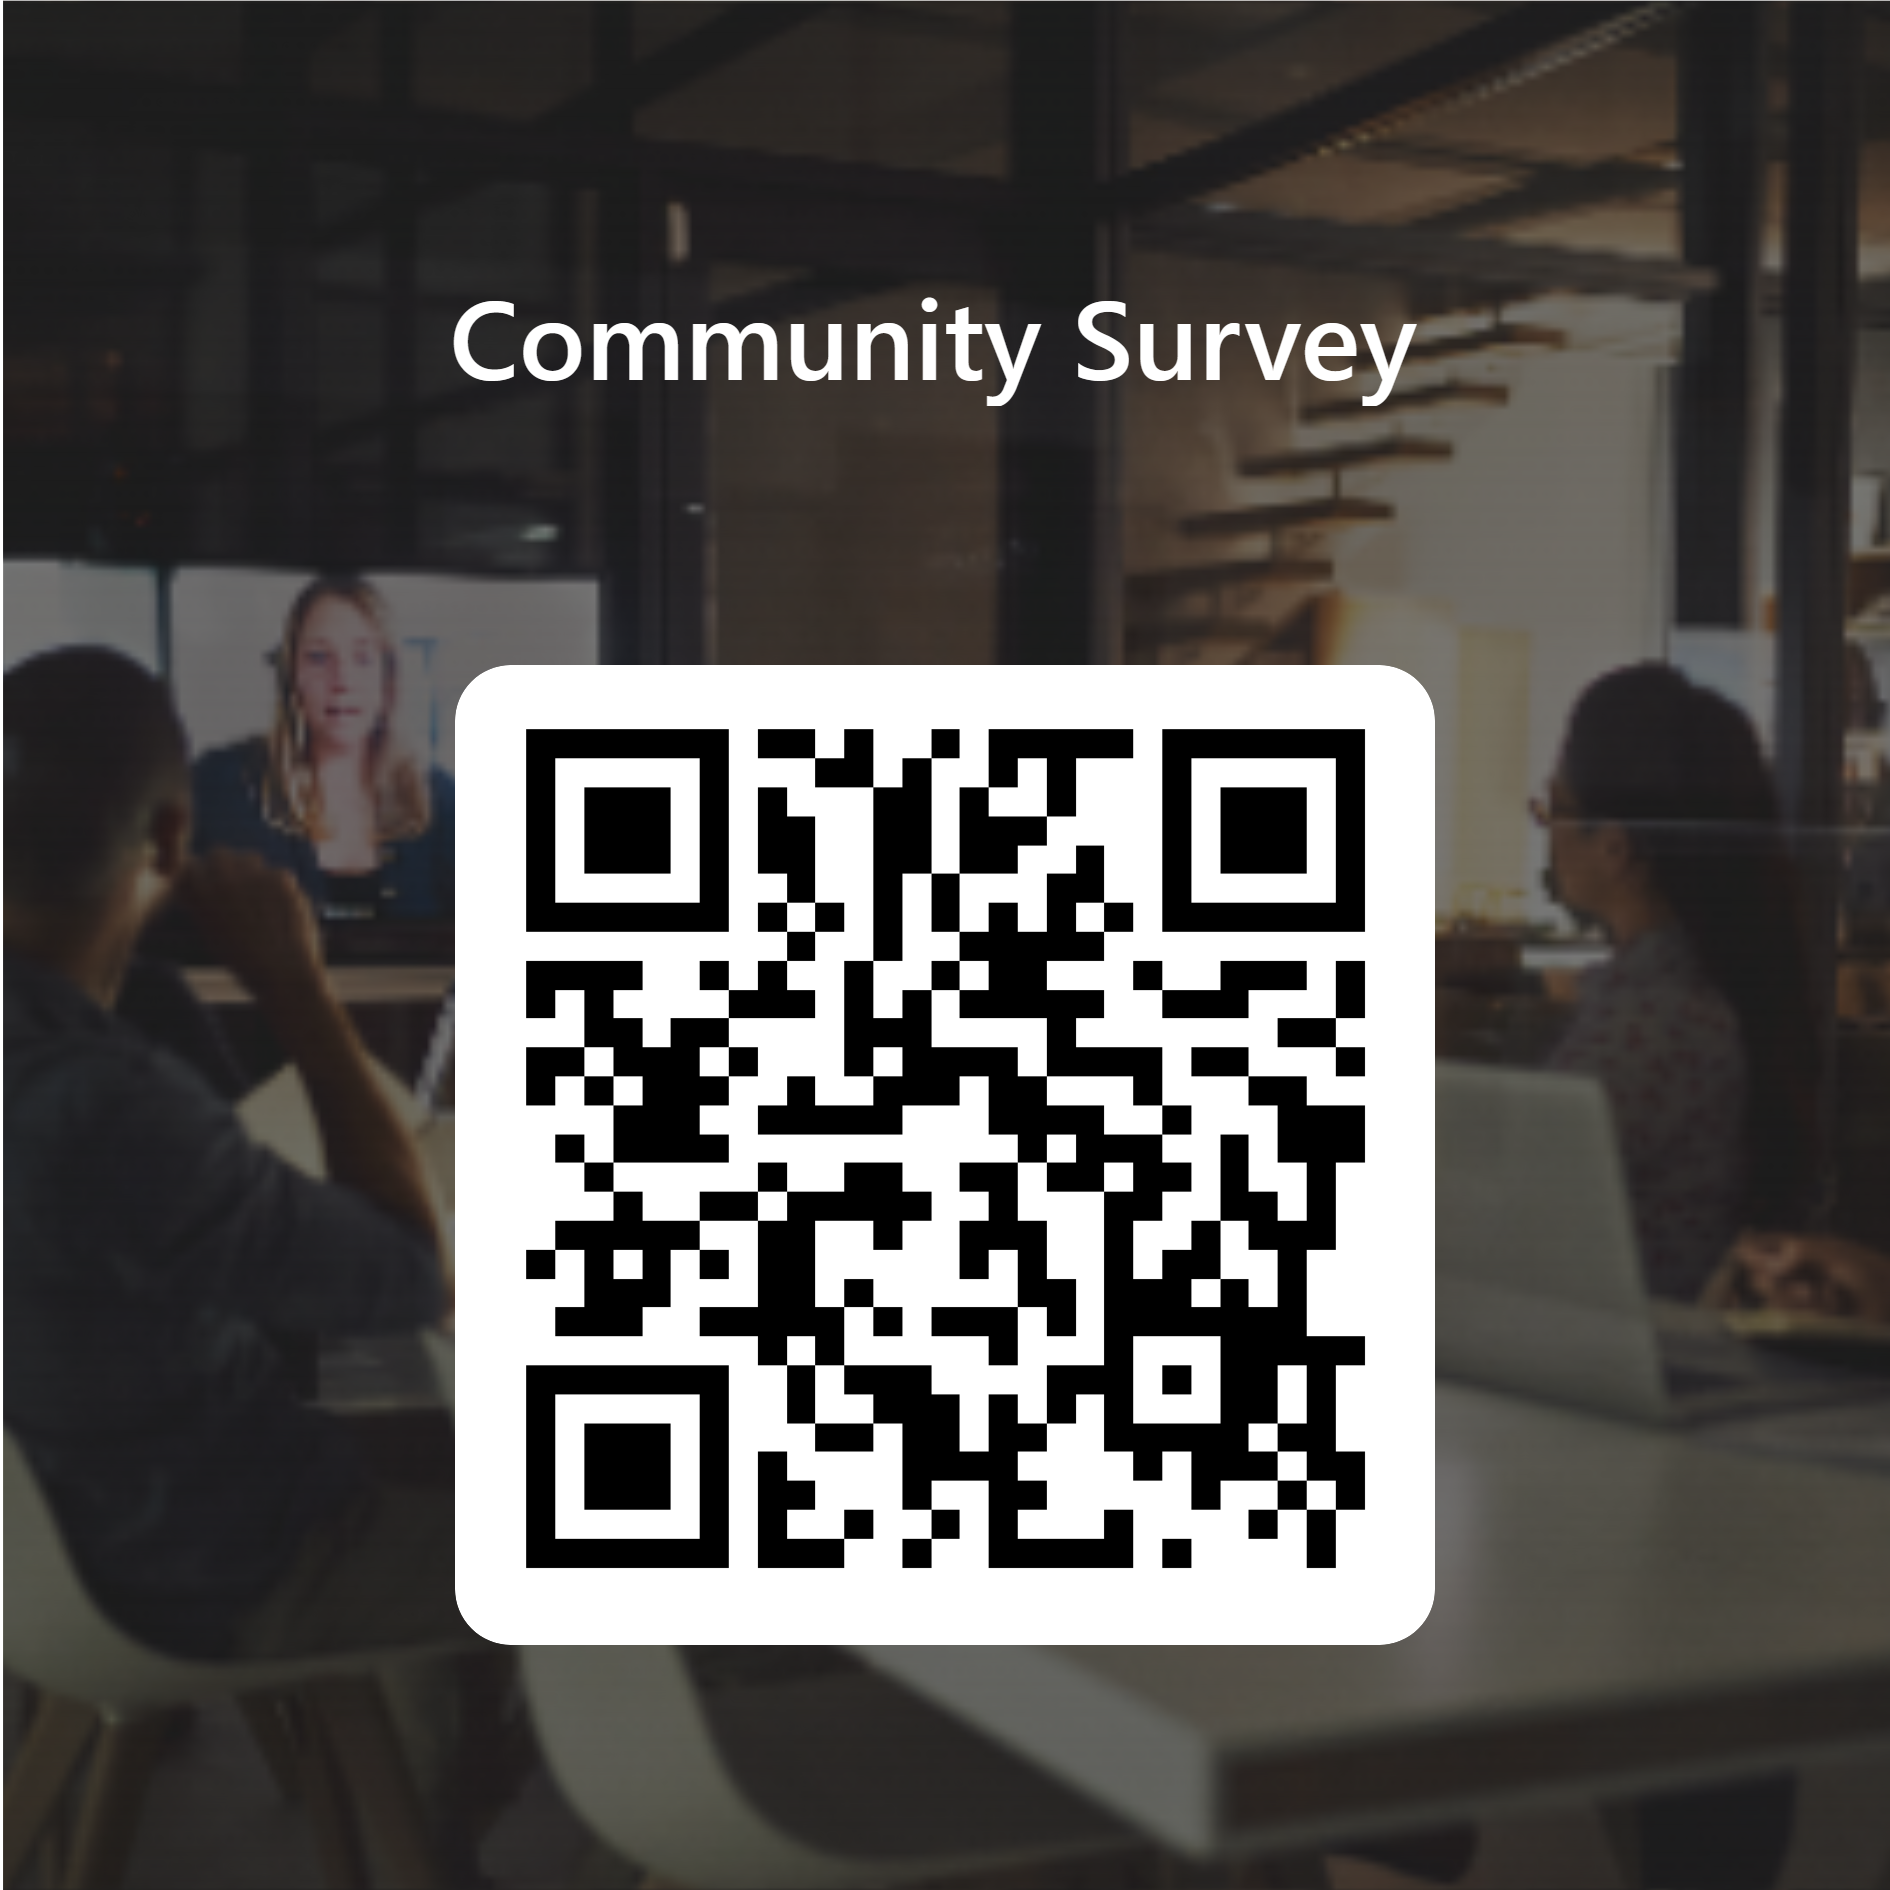 
Loyola Community Survey